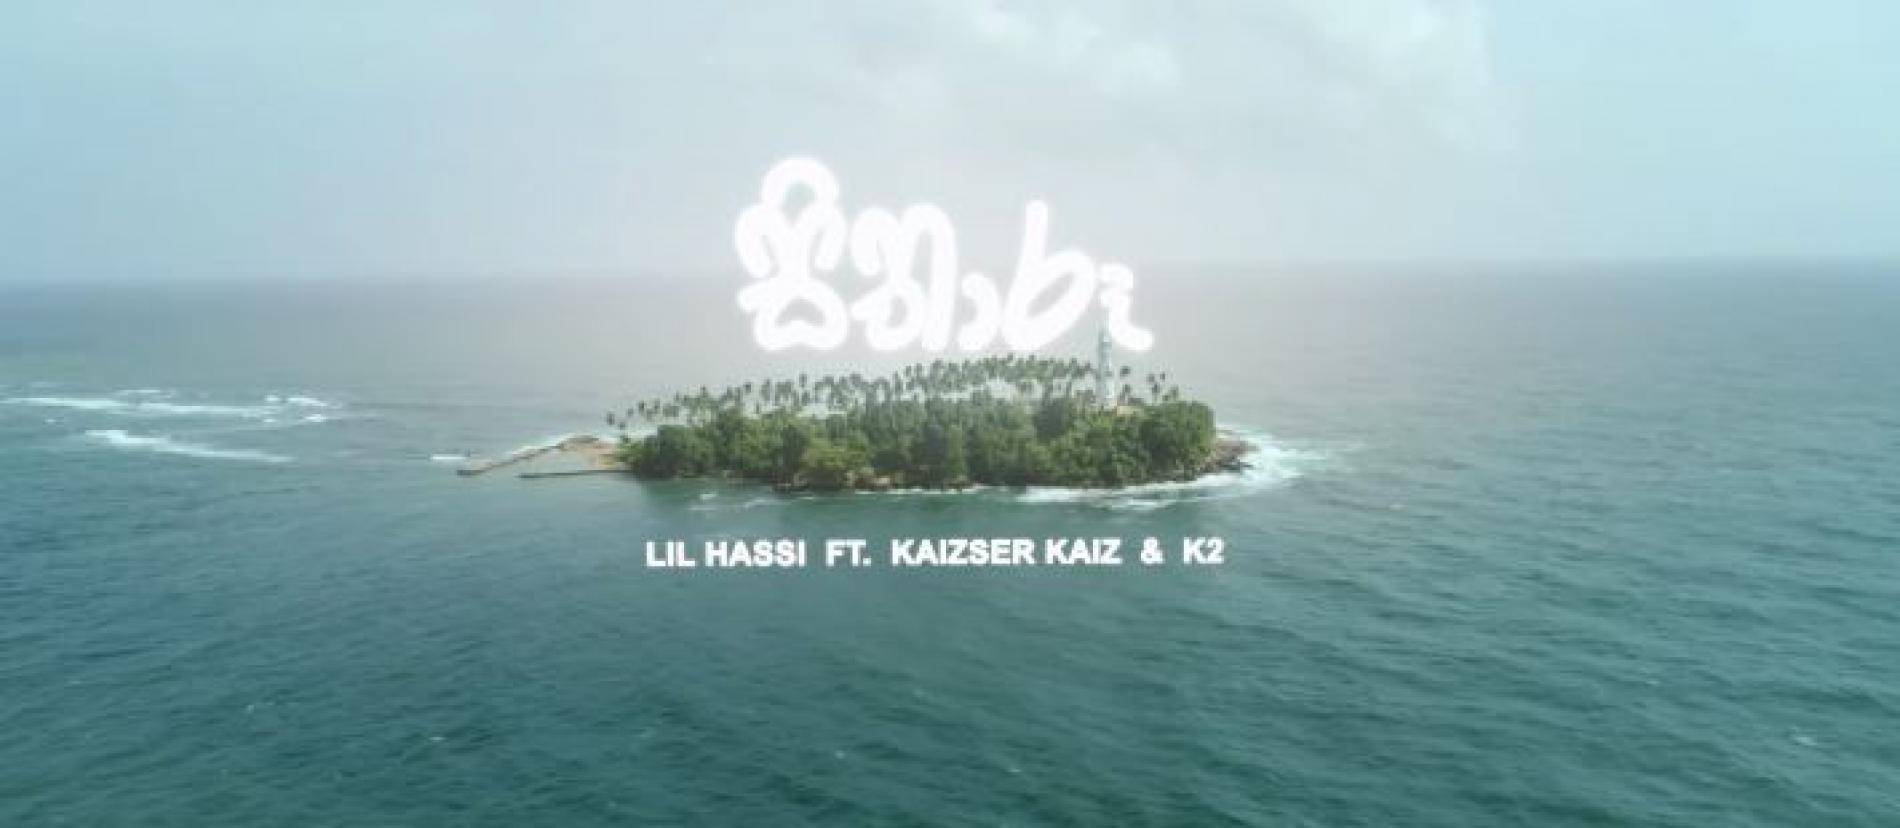 Sitharuu (සිතාරූ) Lil Hassi ft Kaizer kaiz & K2